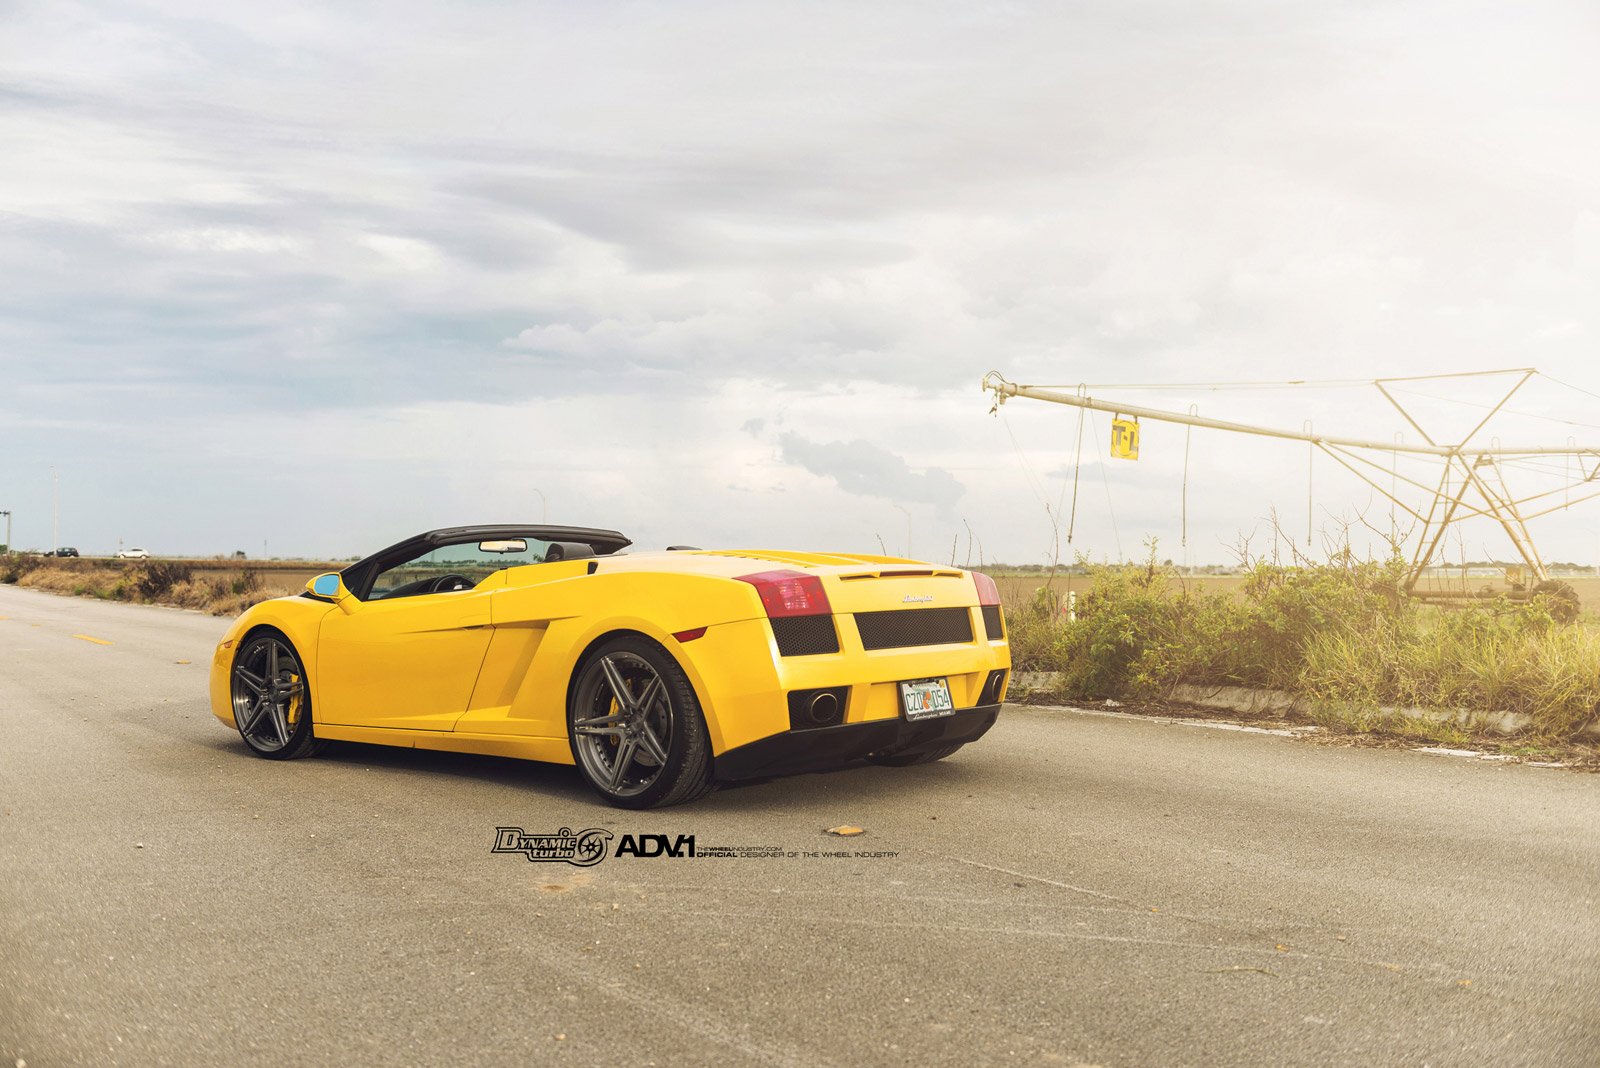 2014, Adv1, Wheels, Lamborghini, Gallardo, Spider, Supercars Wallpaper